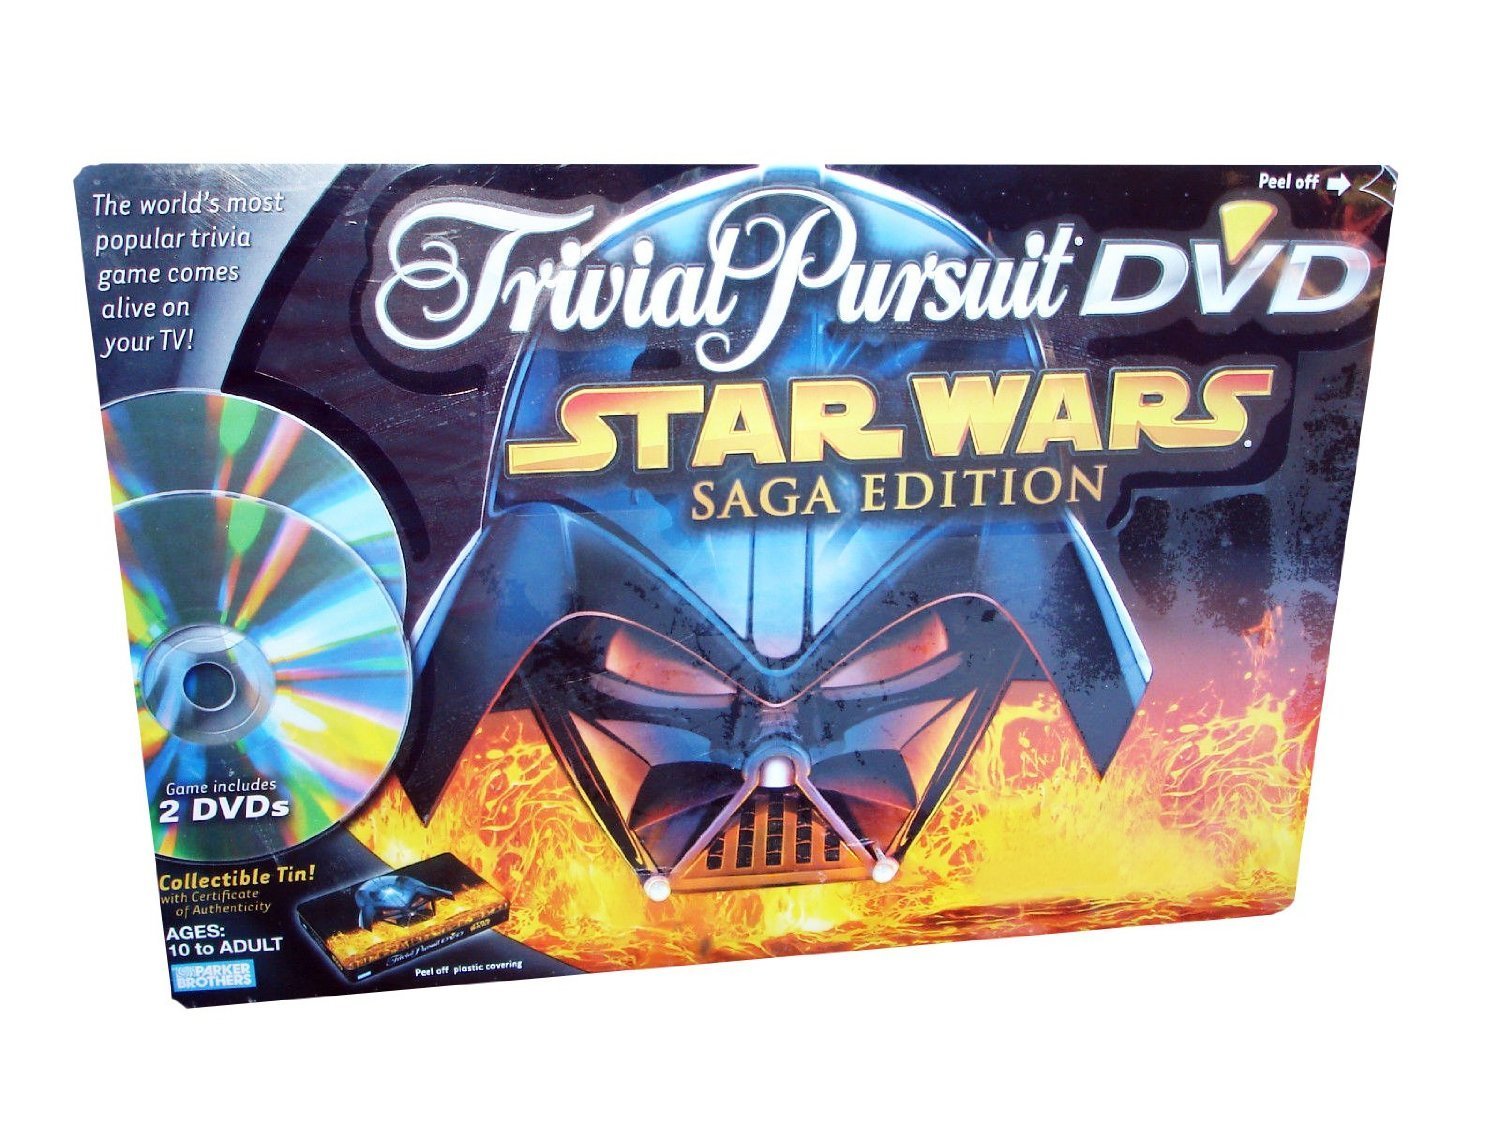 Trivial Pursuit DVD Star Wars Saga Edition